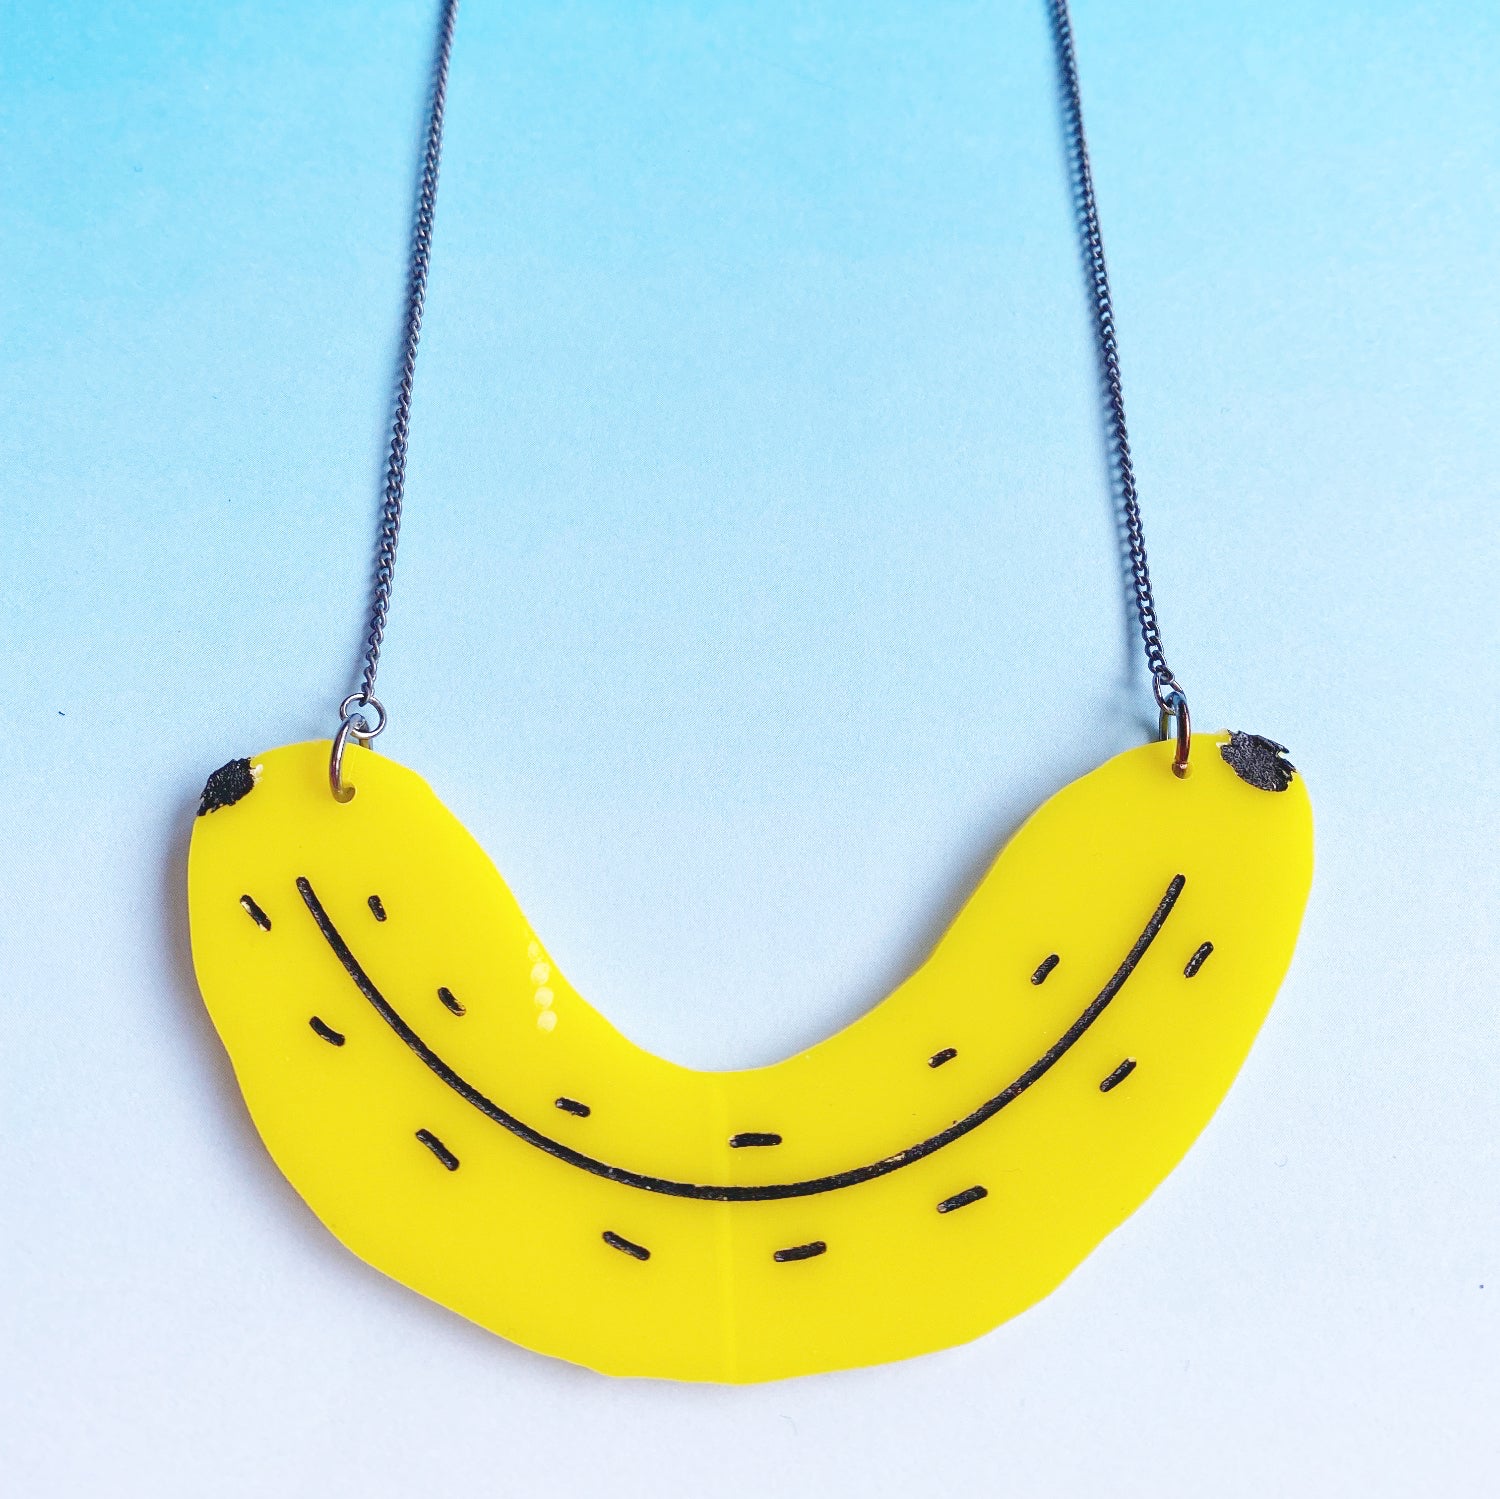 Banana Acrylic Necklace - The Argentum Design Co